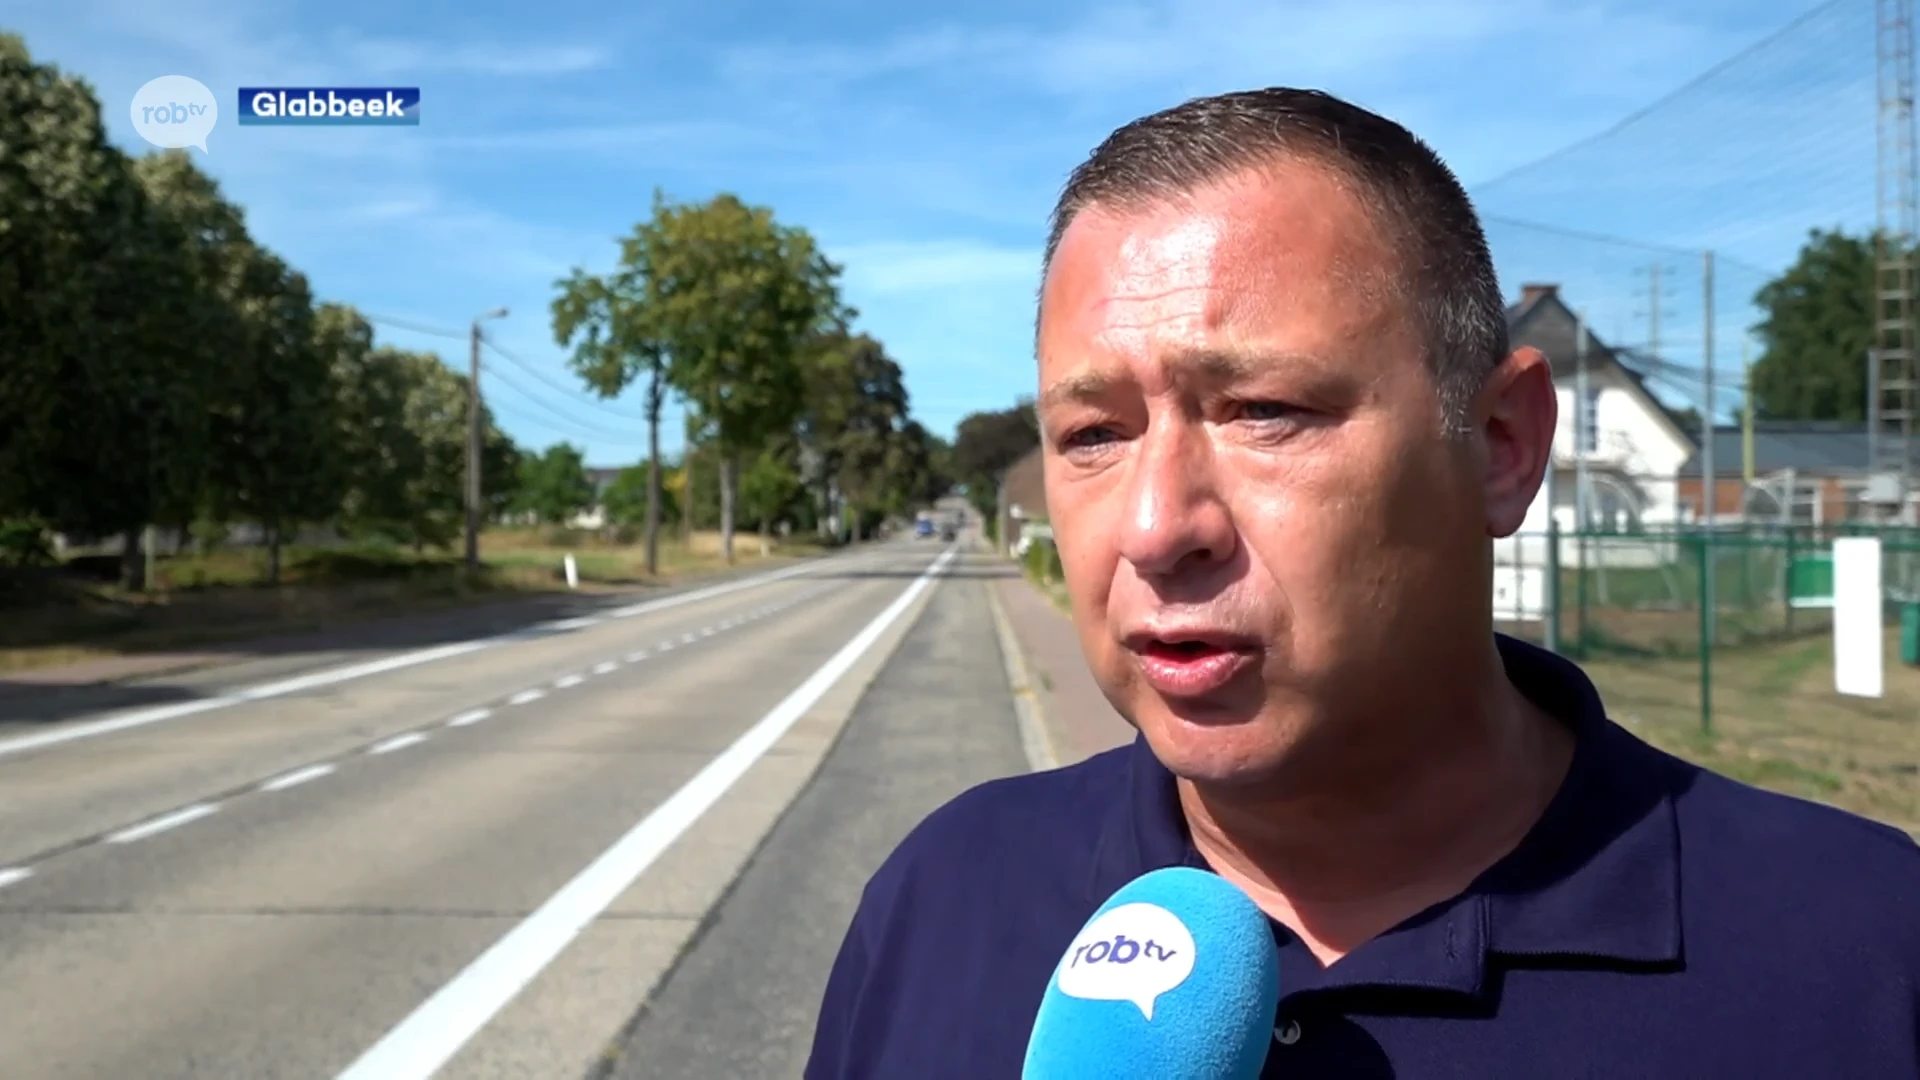 Burgemeester Peter Reekmans wil snelheidsverhoging naar 90 kilometer per uur waar mogelijk, minister Peeters geen voorstander